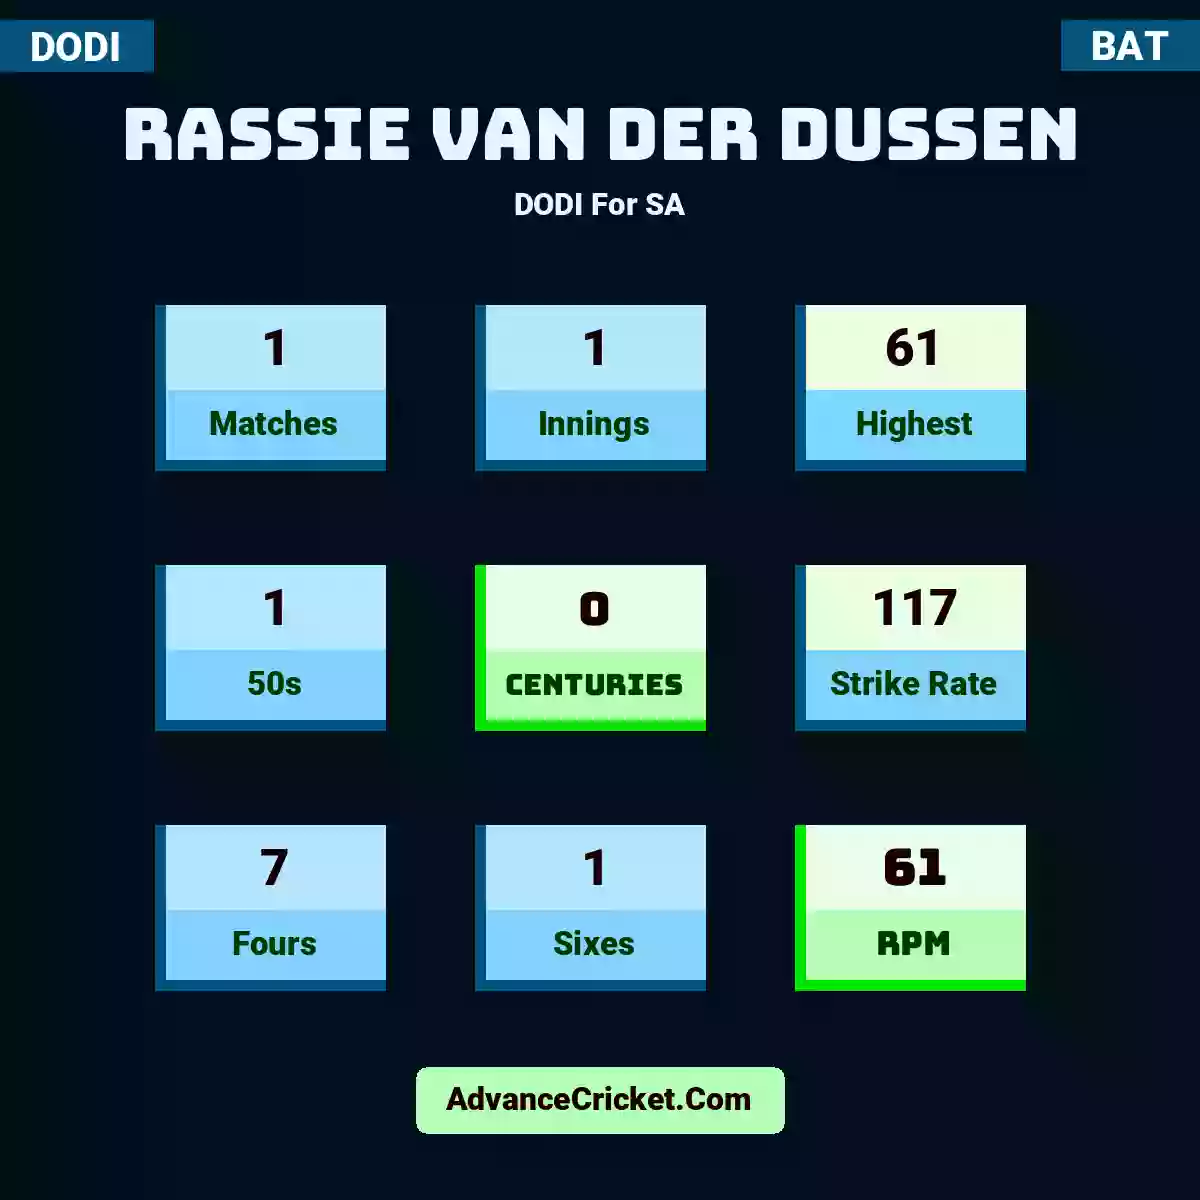 Rassie van der Dussen DODI  For SA, Rassie van der Dussen played 1 matches, scored 61 runs as highest, 1 half-centuries, and 0 centuries, with a strike rate of 117. R.Dussen hit 7 fours and 1 sixes, with an RPM of 61.